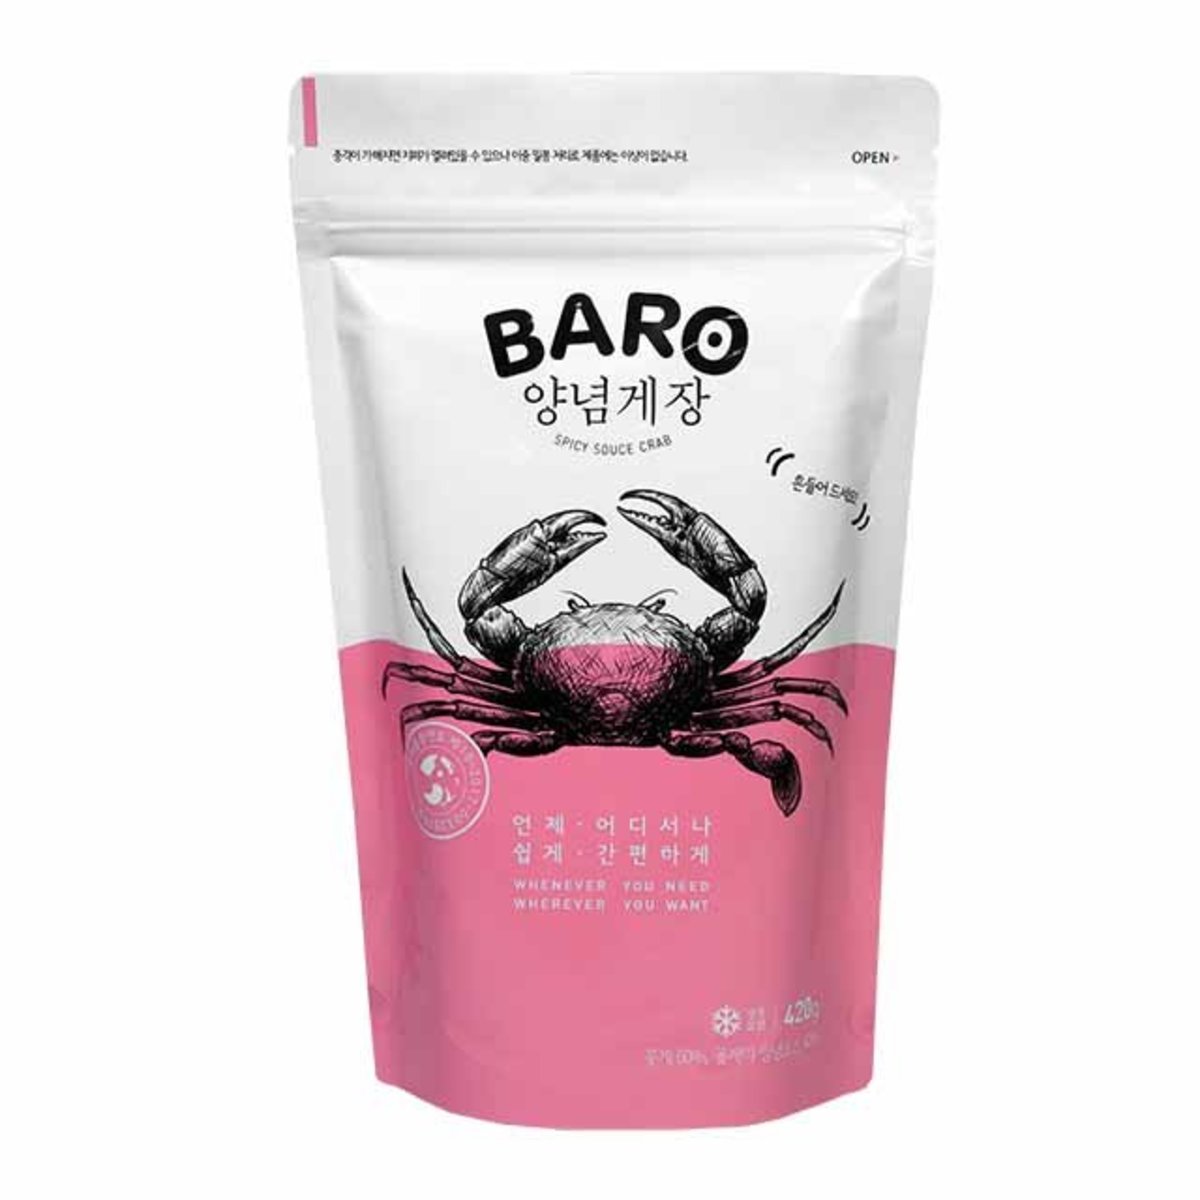 BARO SPICY SAUCE CRAB 420g (8-10pcs) (Frozen-18°C) 韓國辣醬蟹